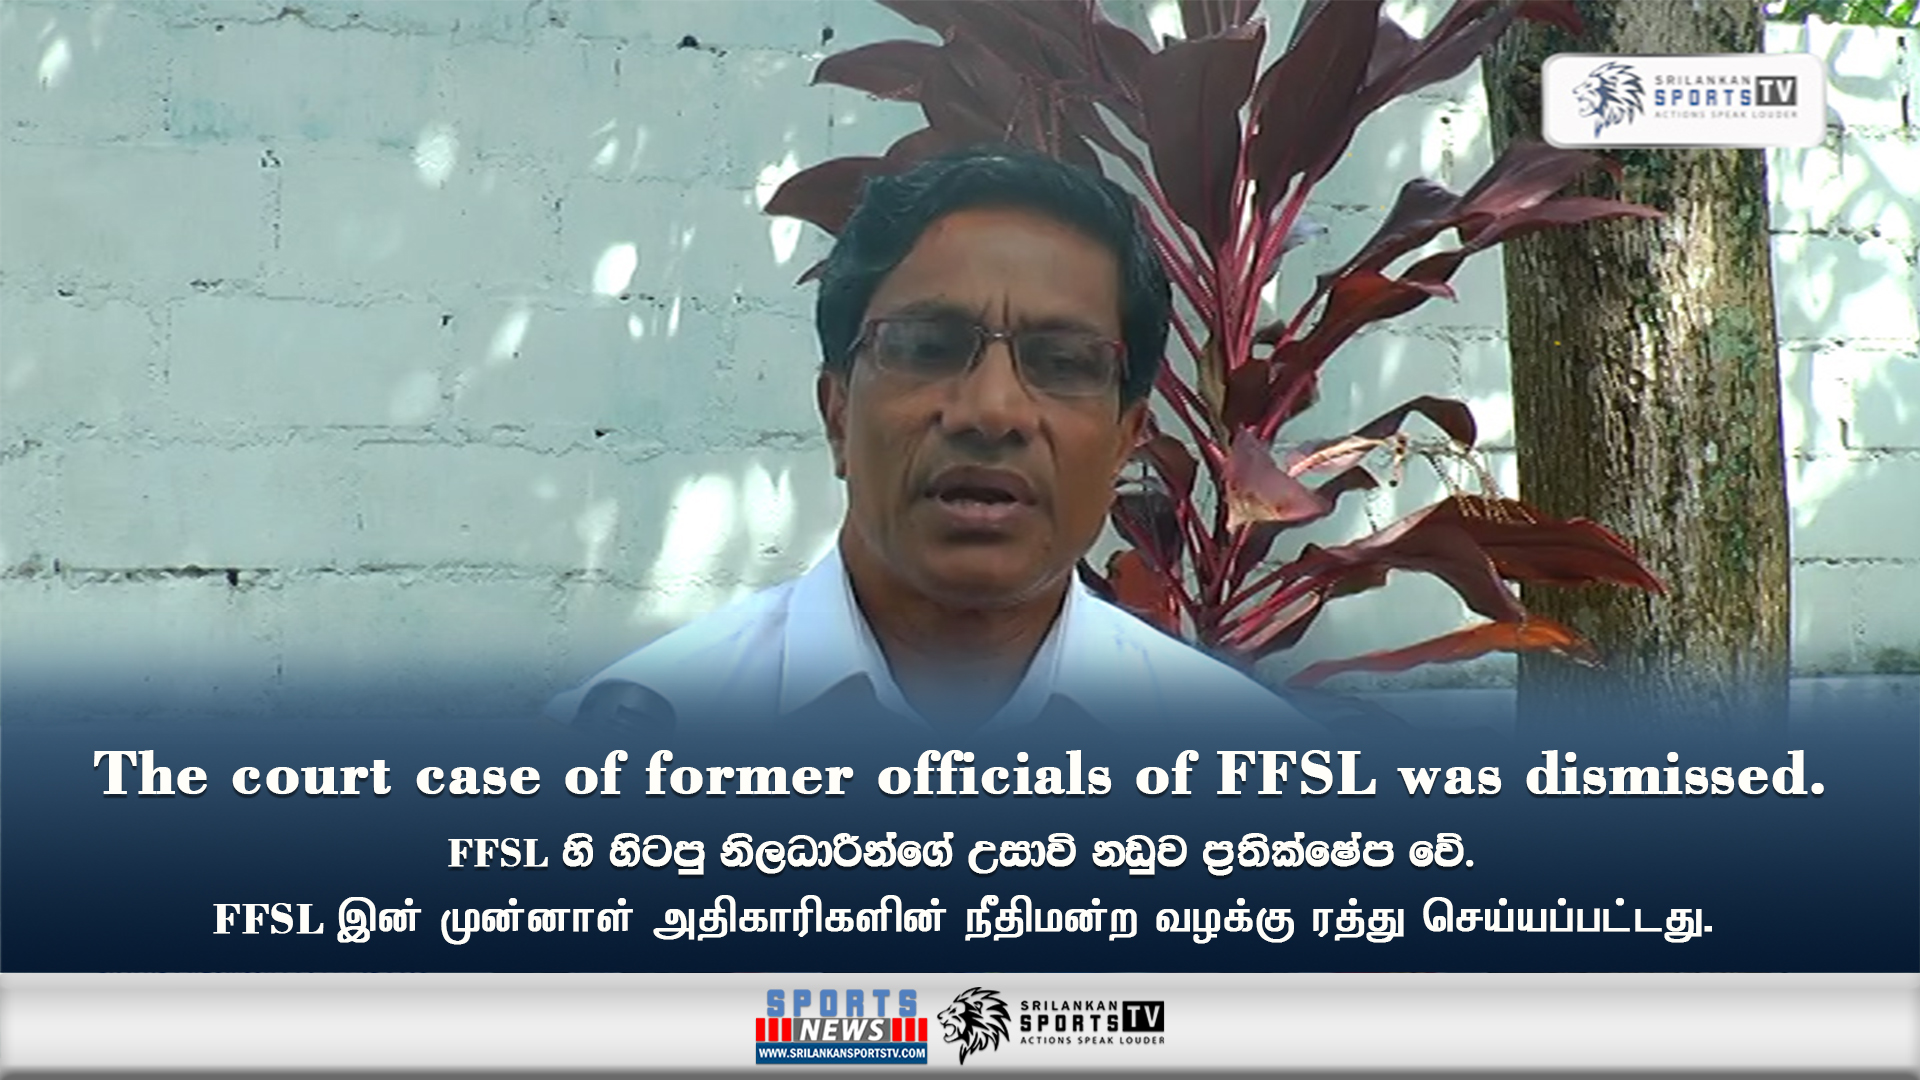 The court case of former officials of FFSL was dismissed.